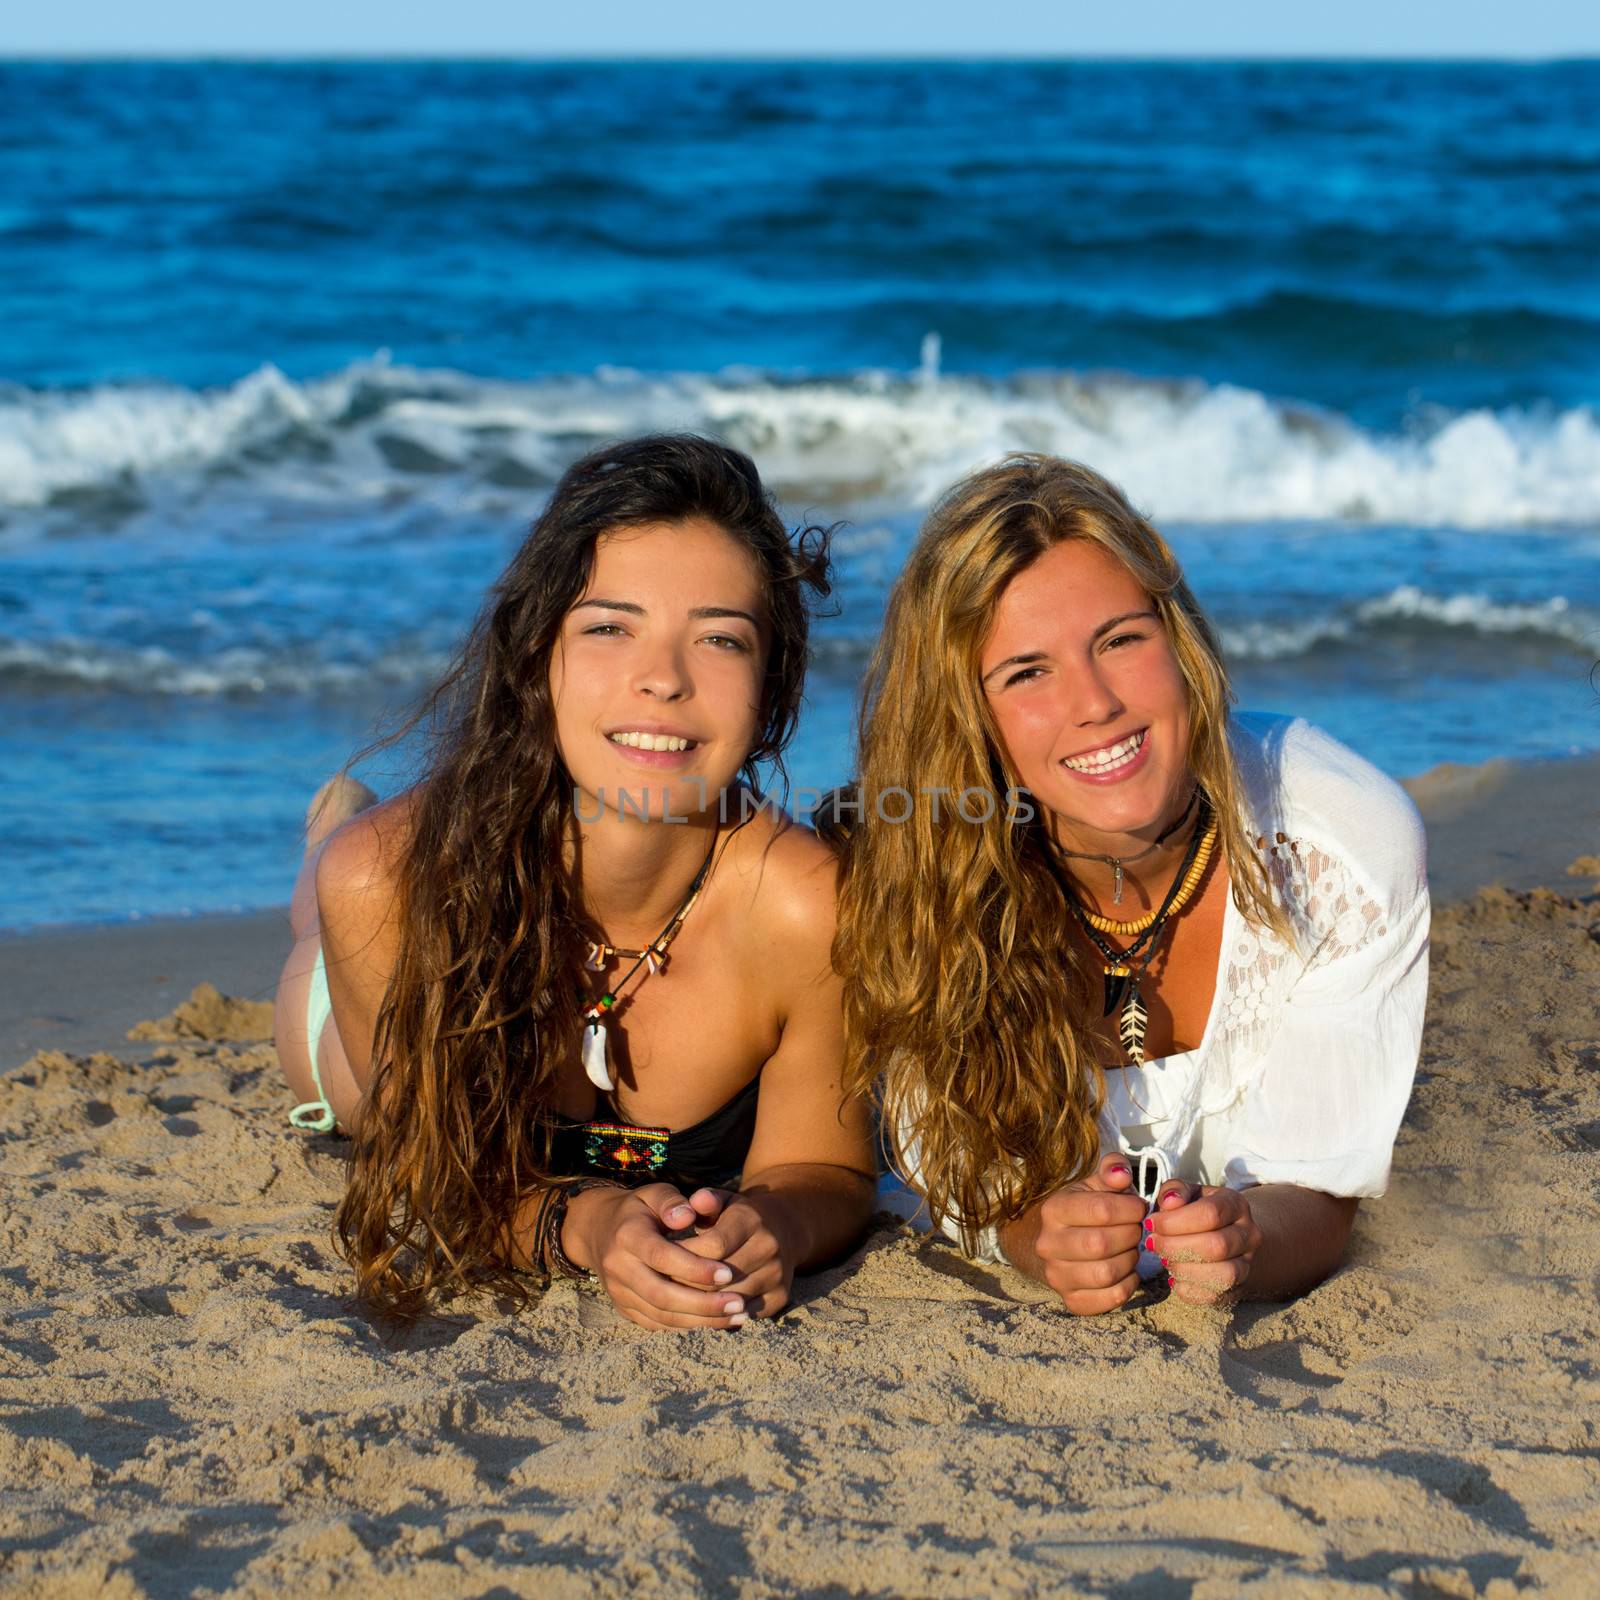 Girls friends having fun happy lying on the beach sand shore